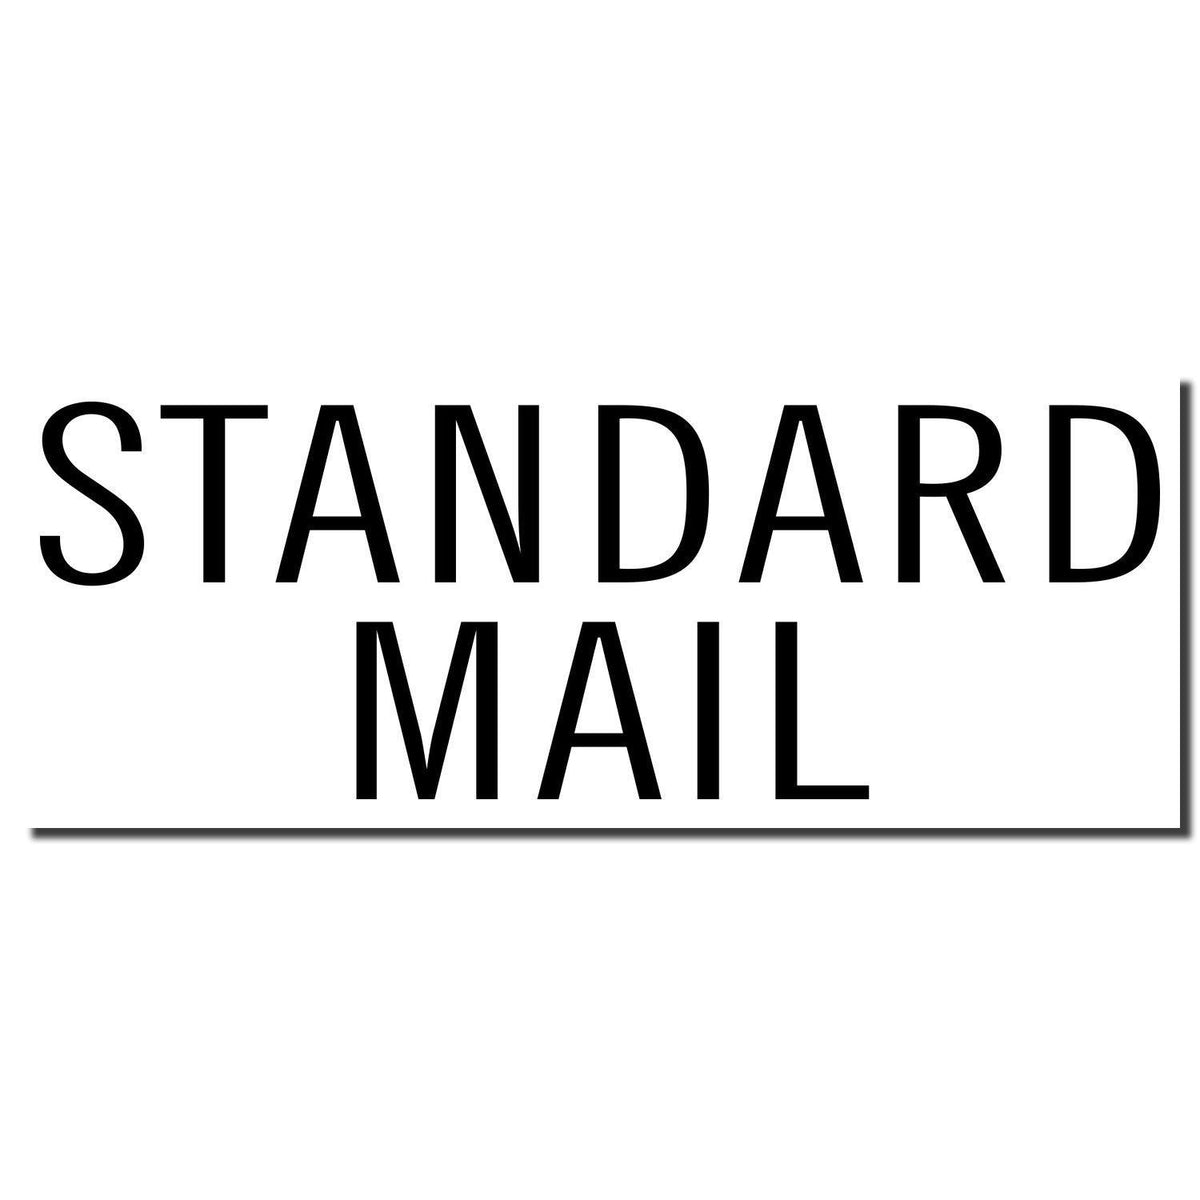 Enlarged Imprint Standard Mail Stacked Rubber Stamp Sample